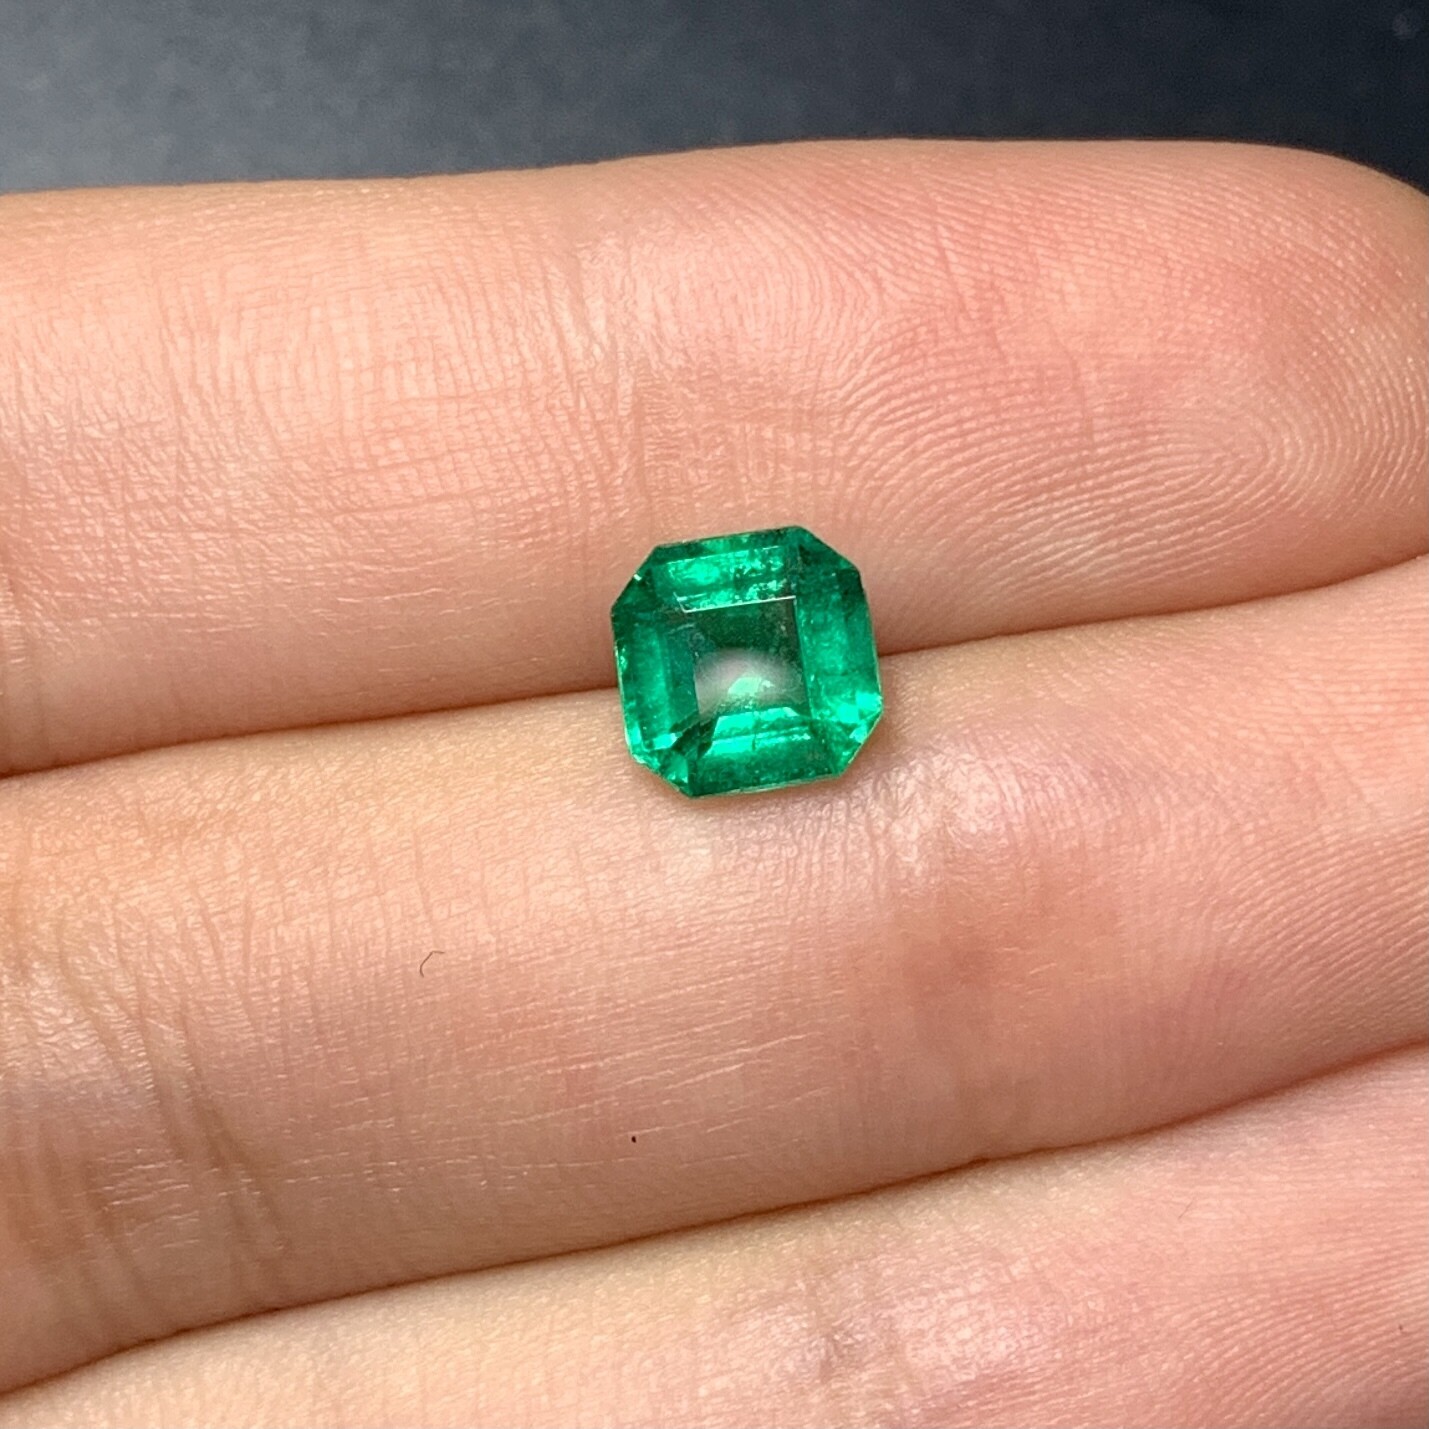 Sq.emerald cut 1.30 ct